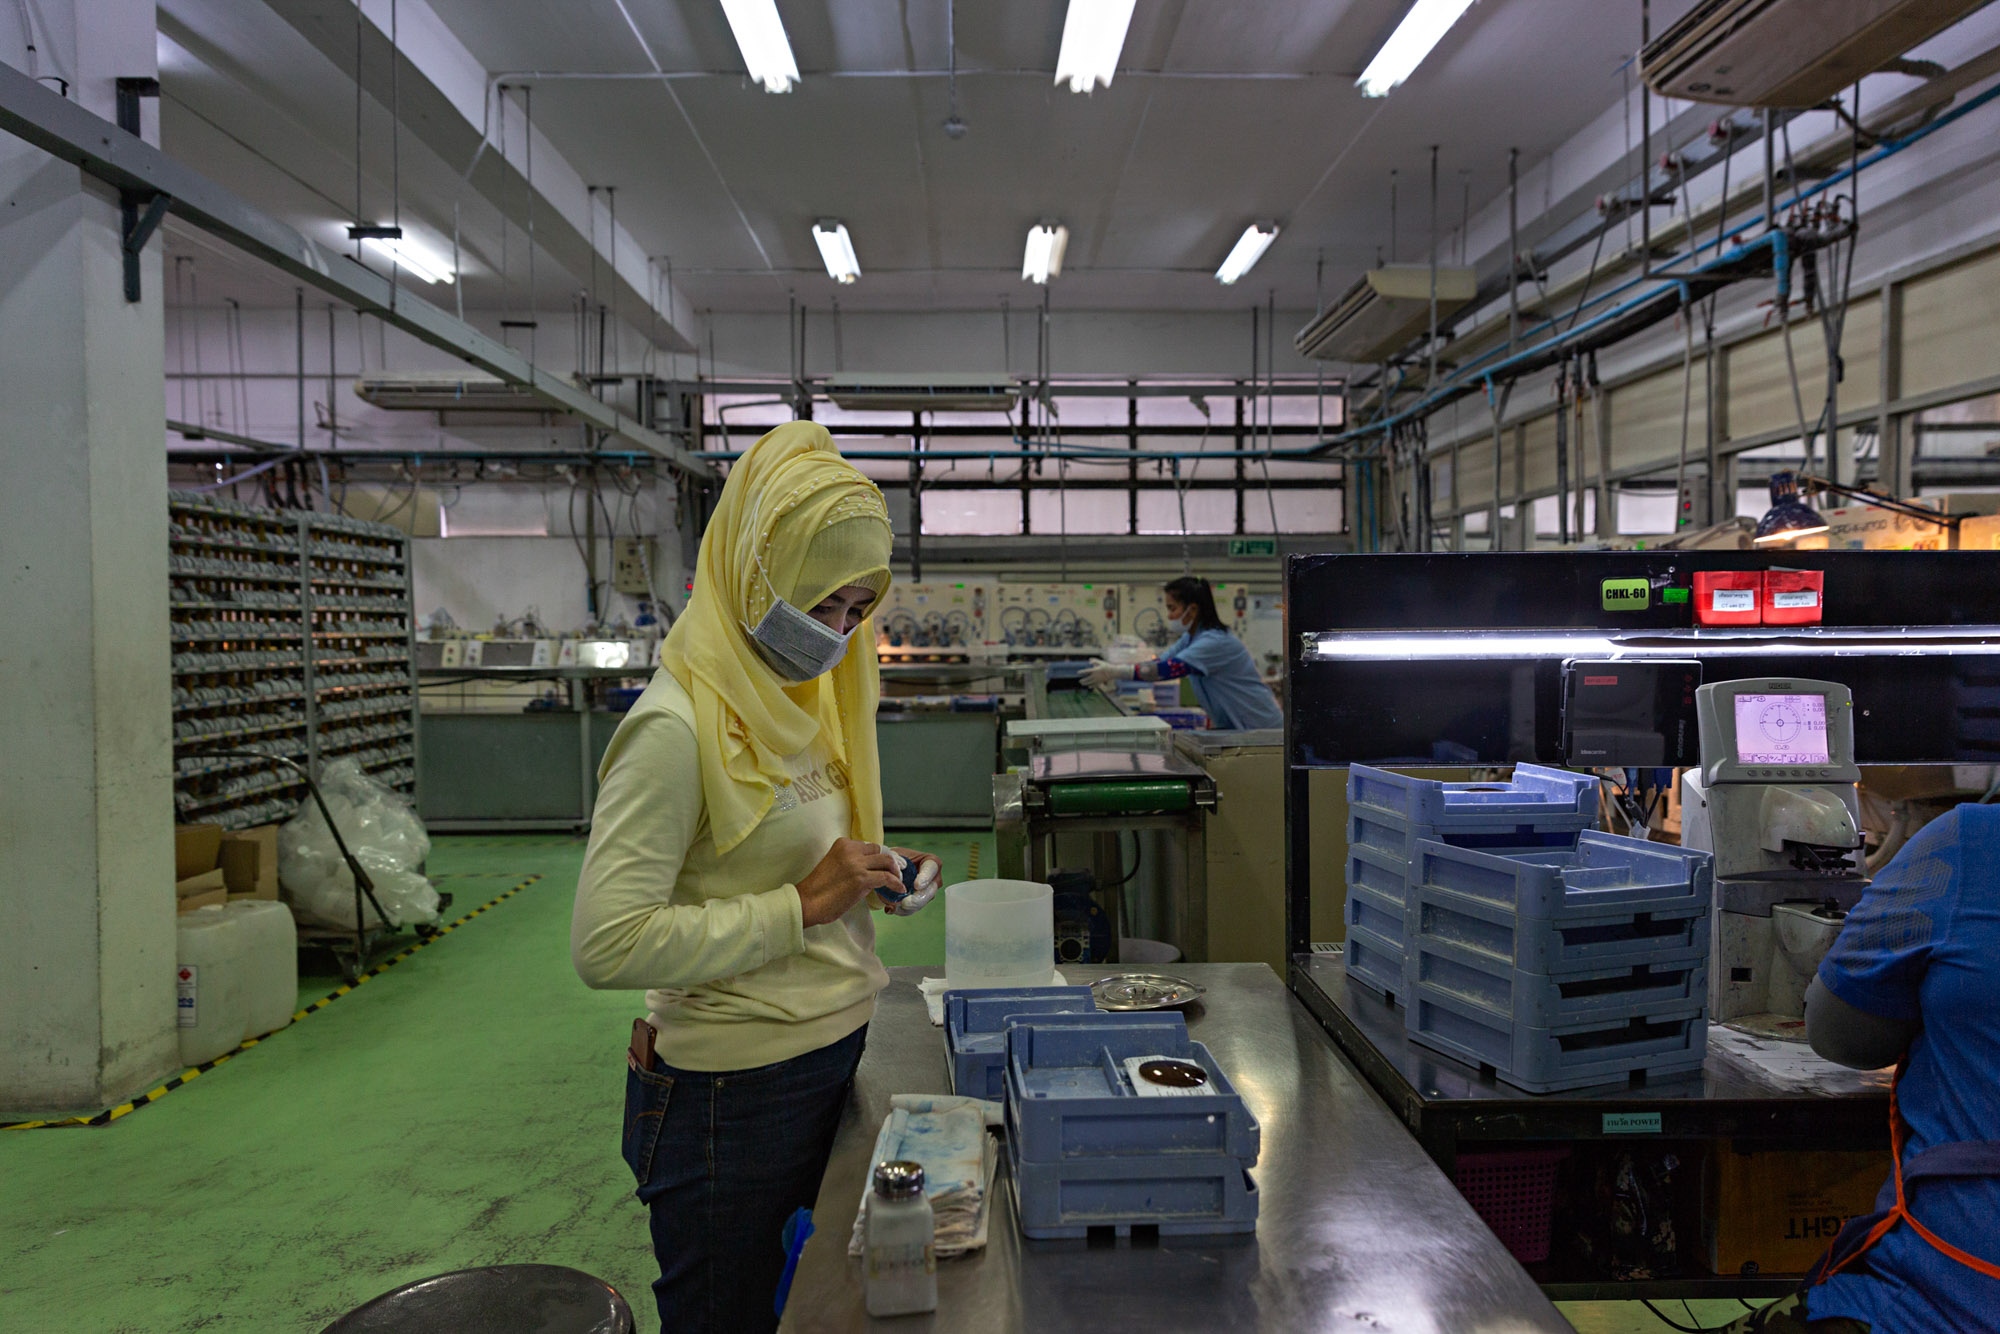 Thailand Glasses Factory: Stern - An employee checks lenses before sending them along the...